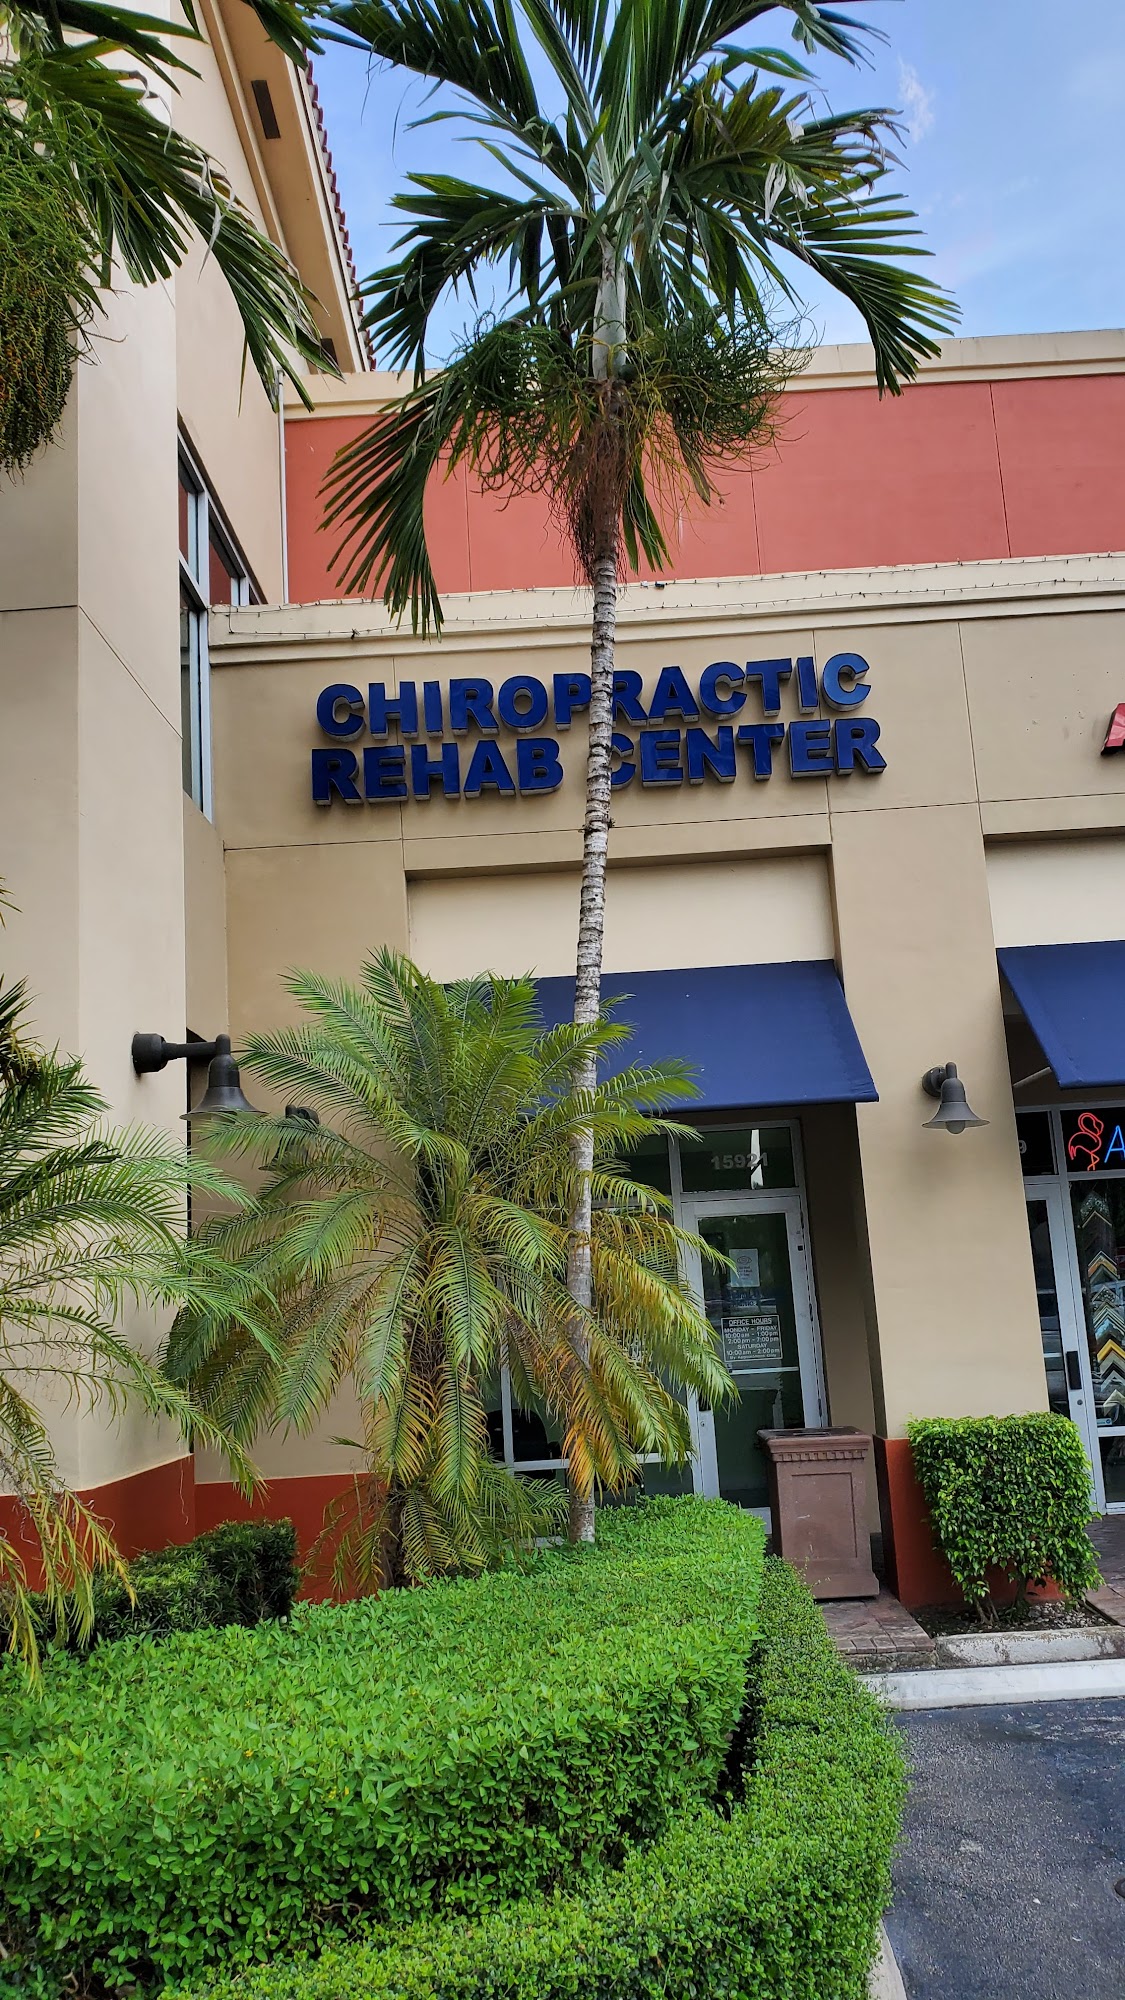 Biscayne Chiropractic Rehabilitation Center